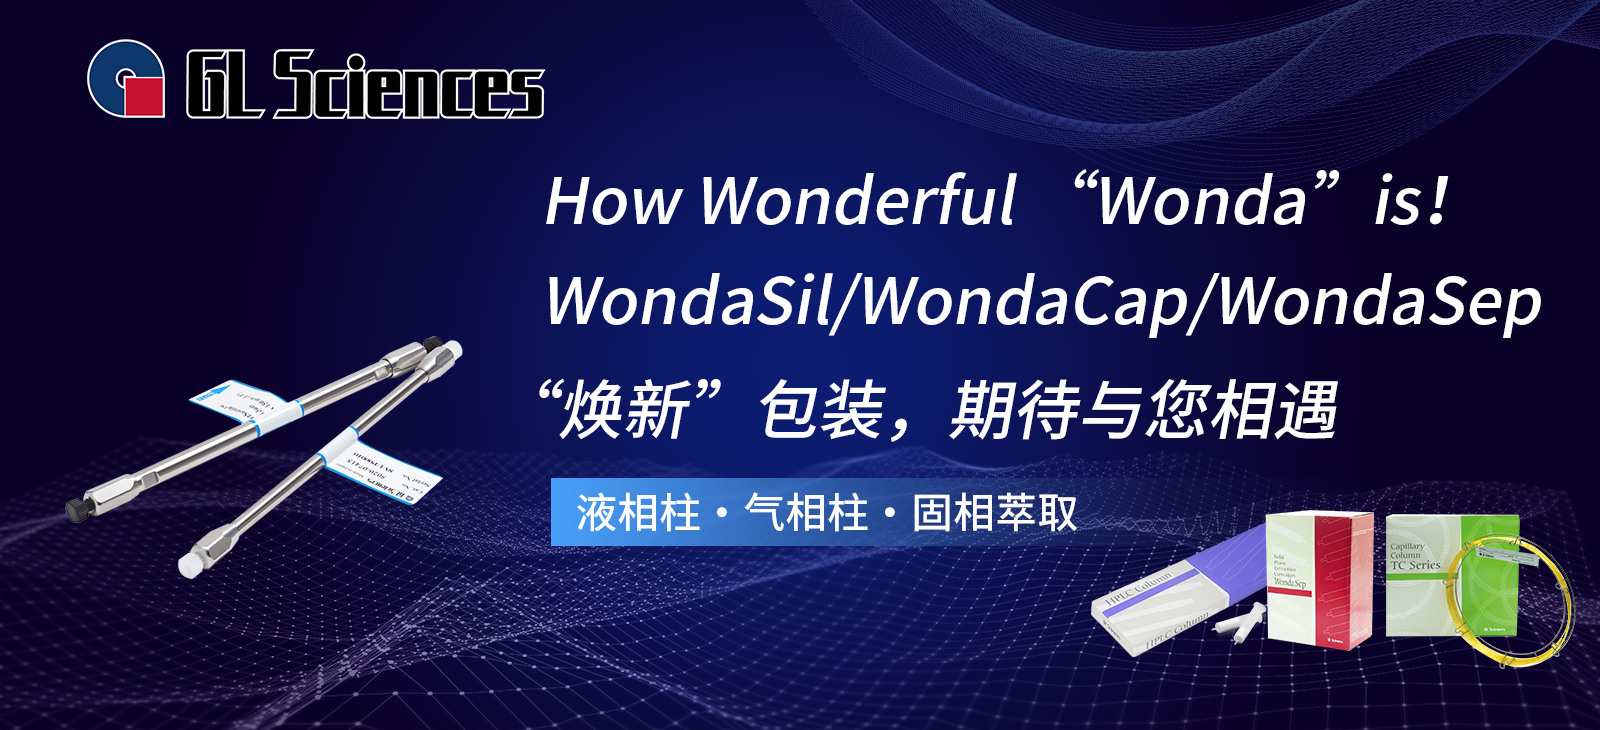 Wonda系列焕新包装，期待与您相遇